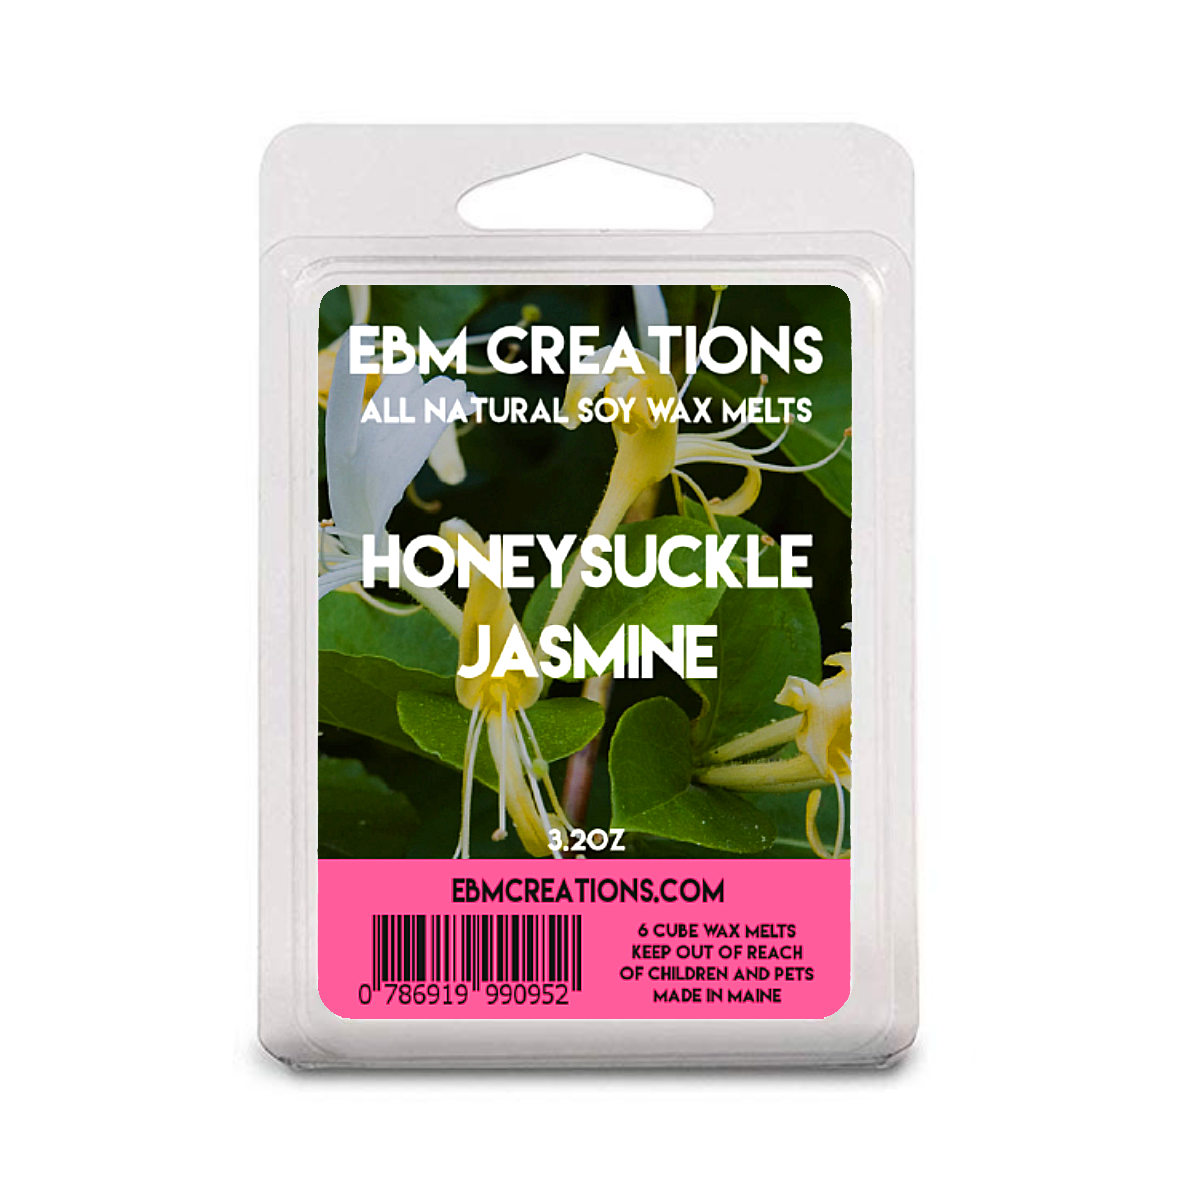 Honeysuckle Jasmine - 3.2 oz Clamshell